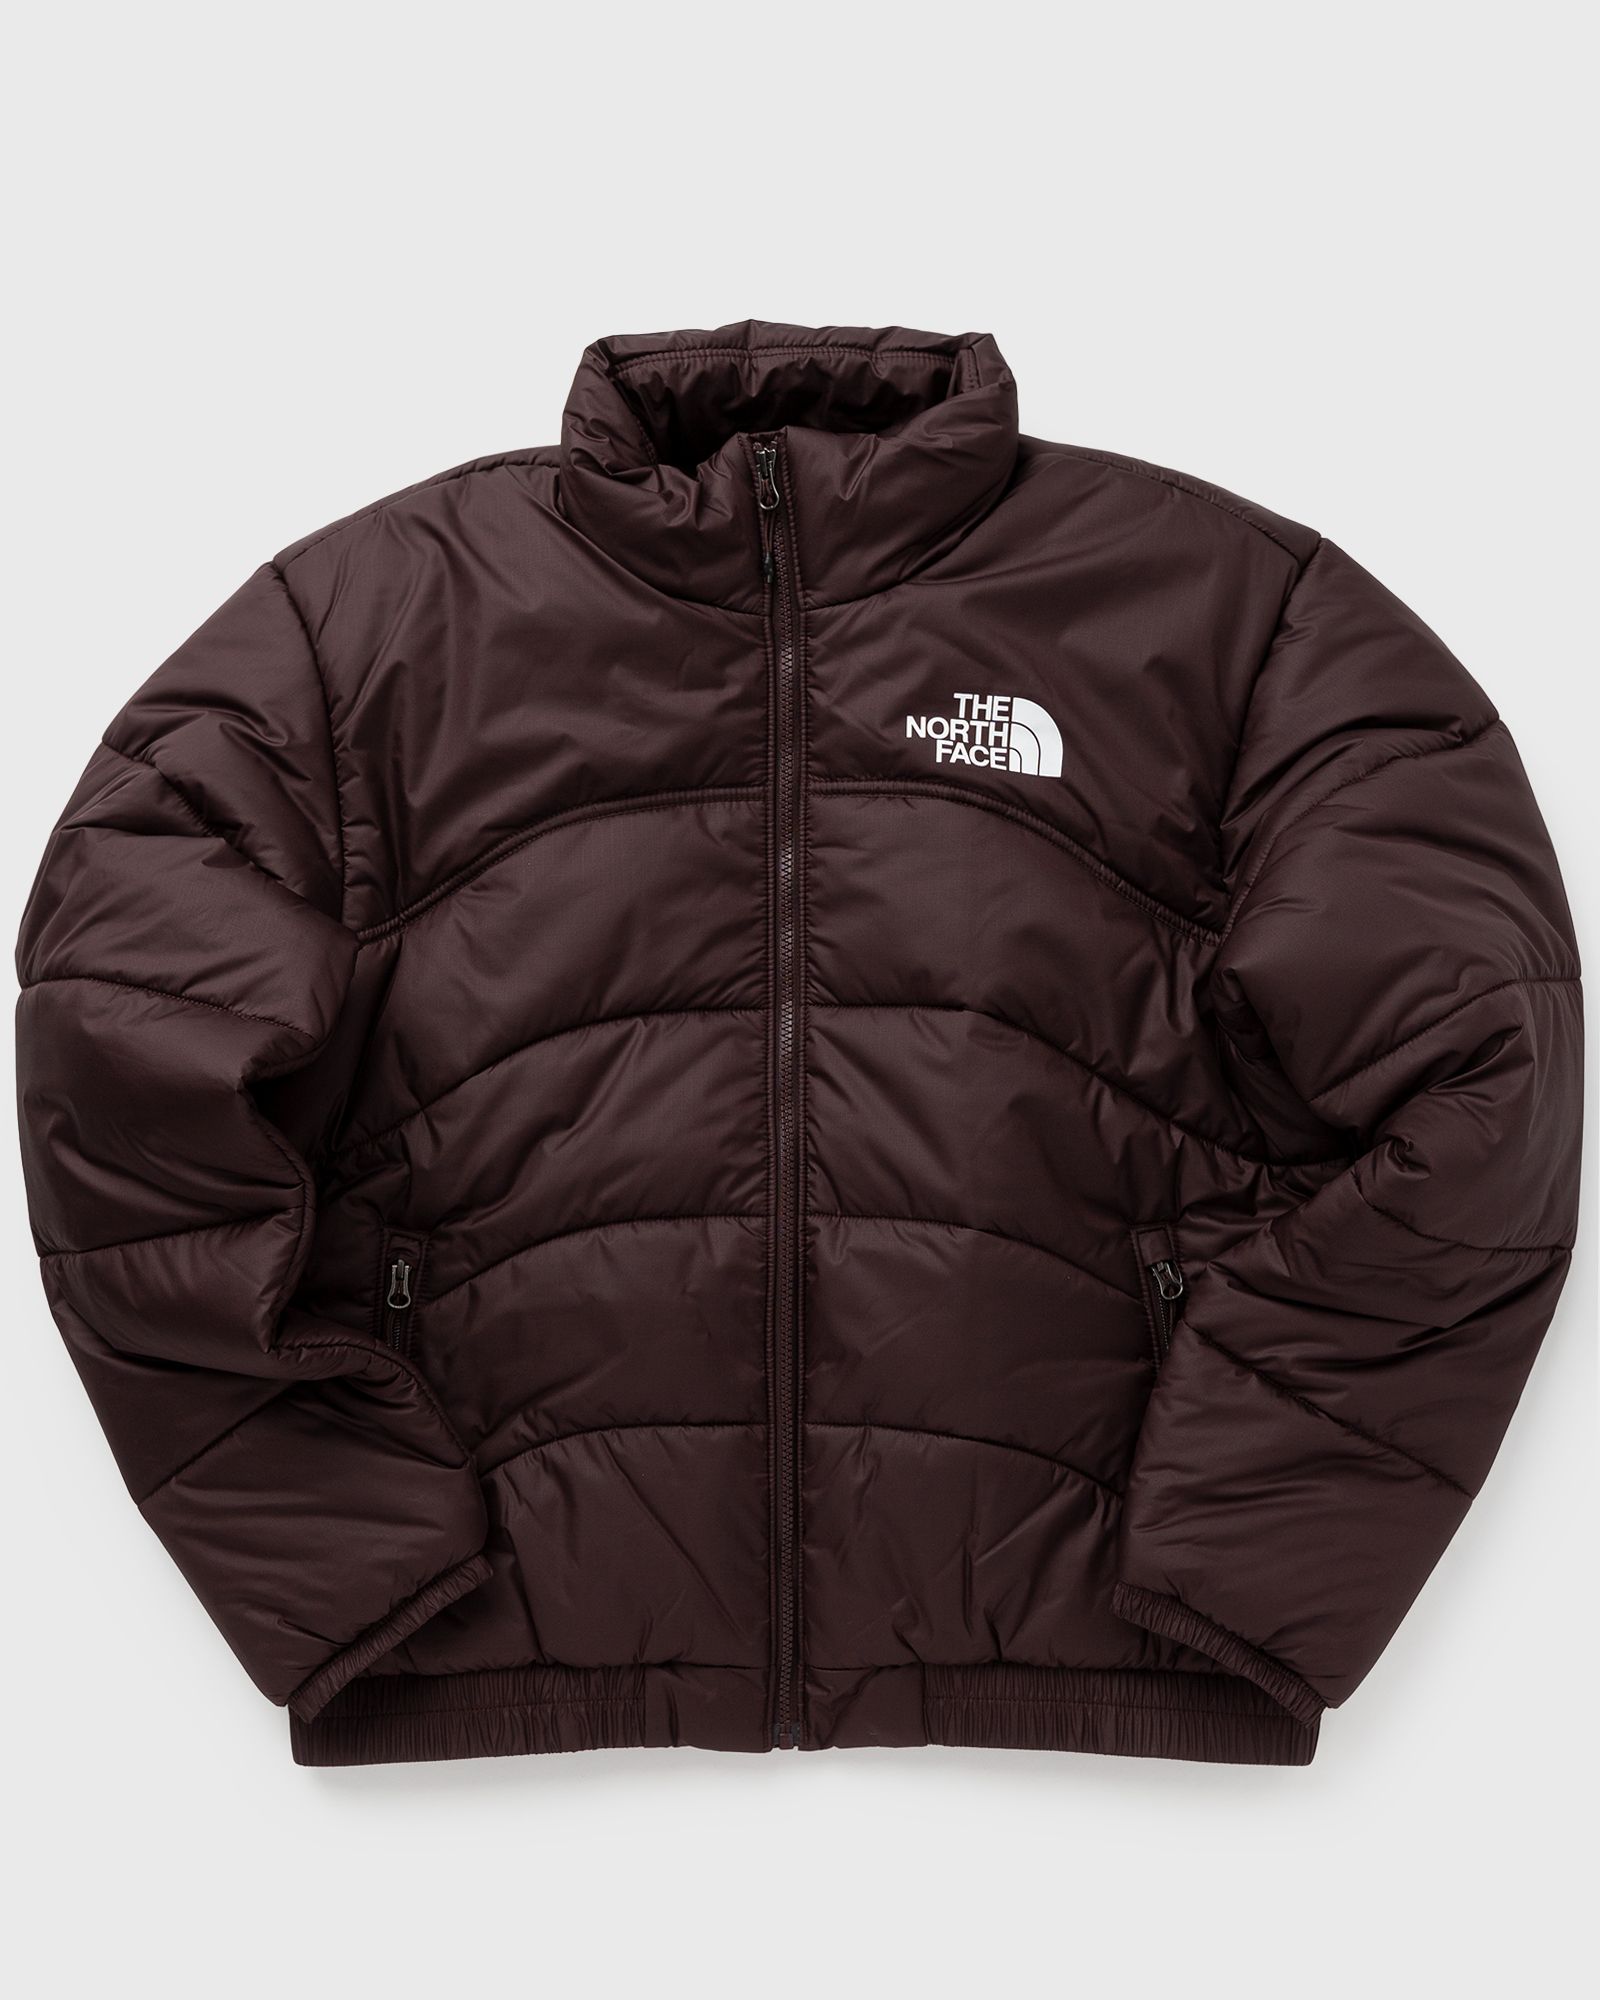 The North Face - jacket 2000 men down & puffer jackets brown in größe:xl